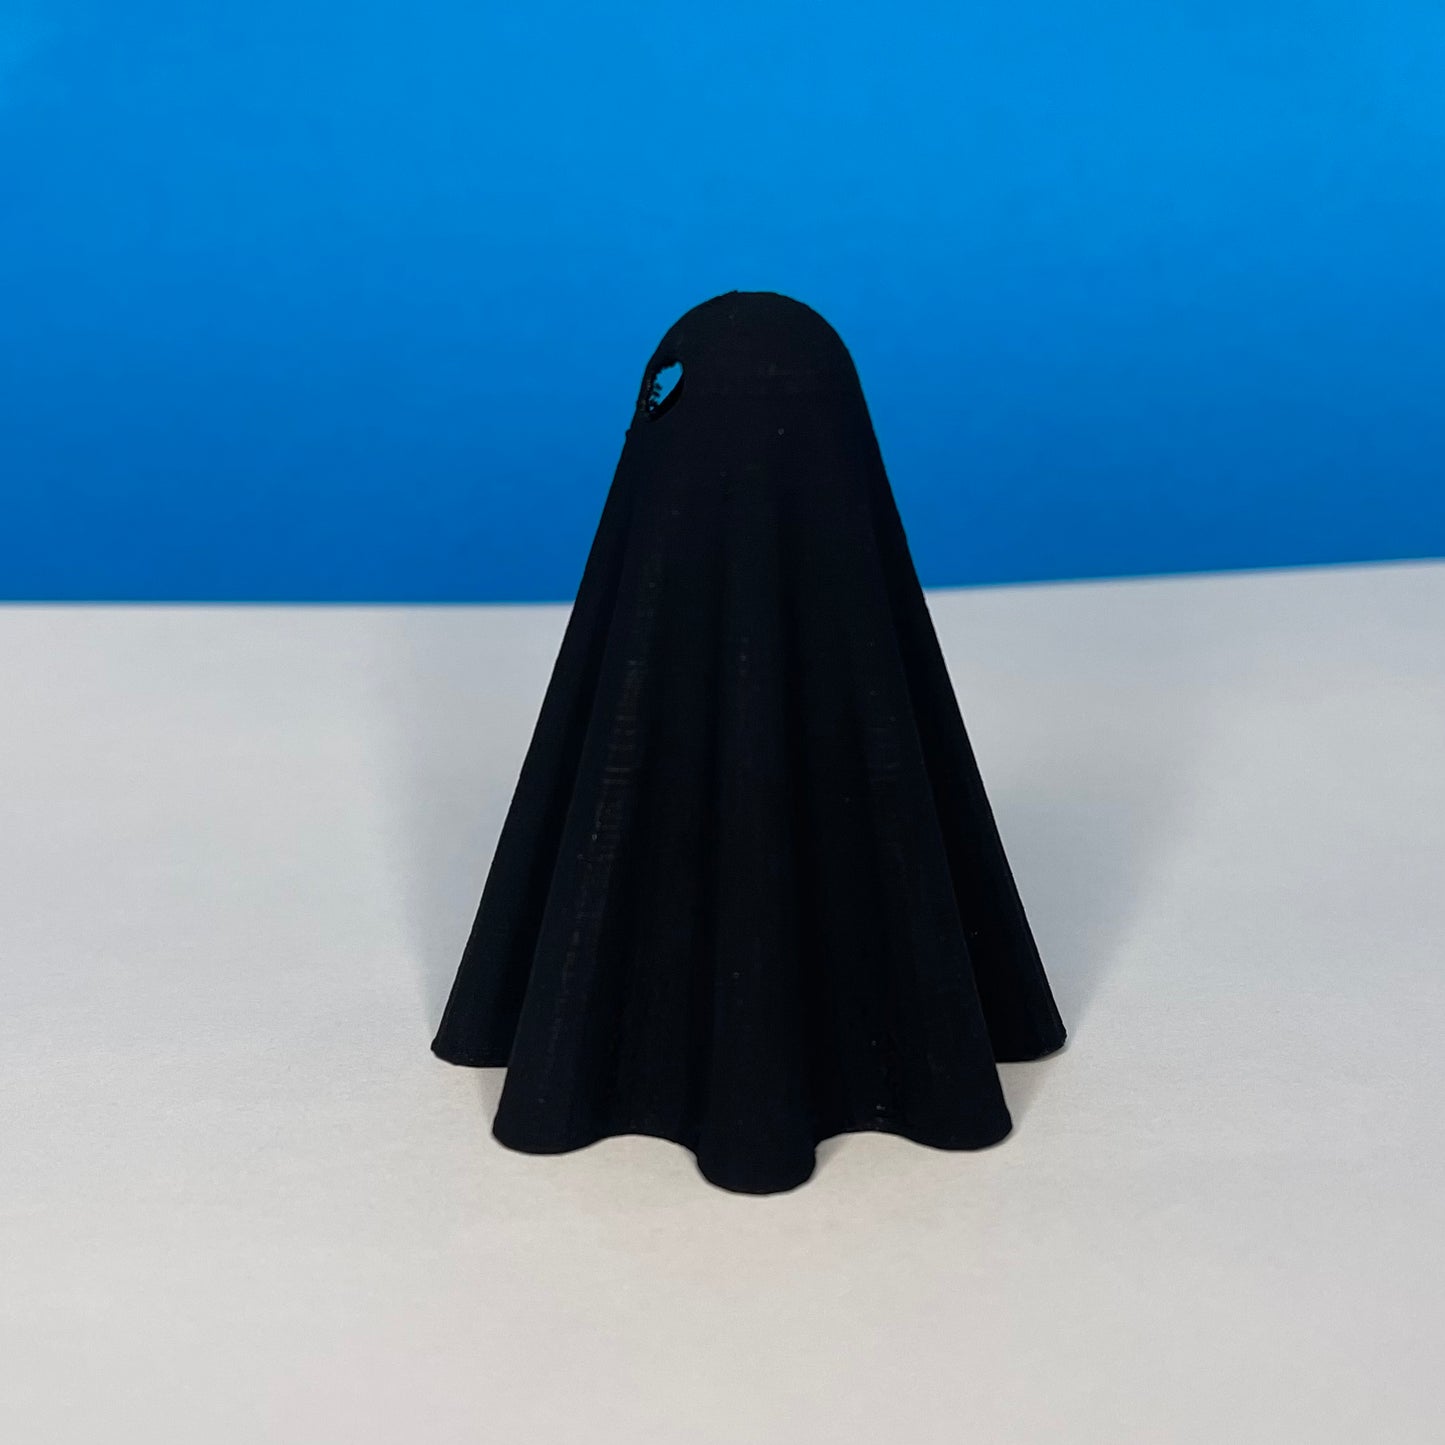 Black 3.0 Ghost Ornament